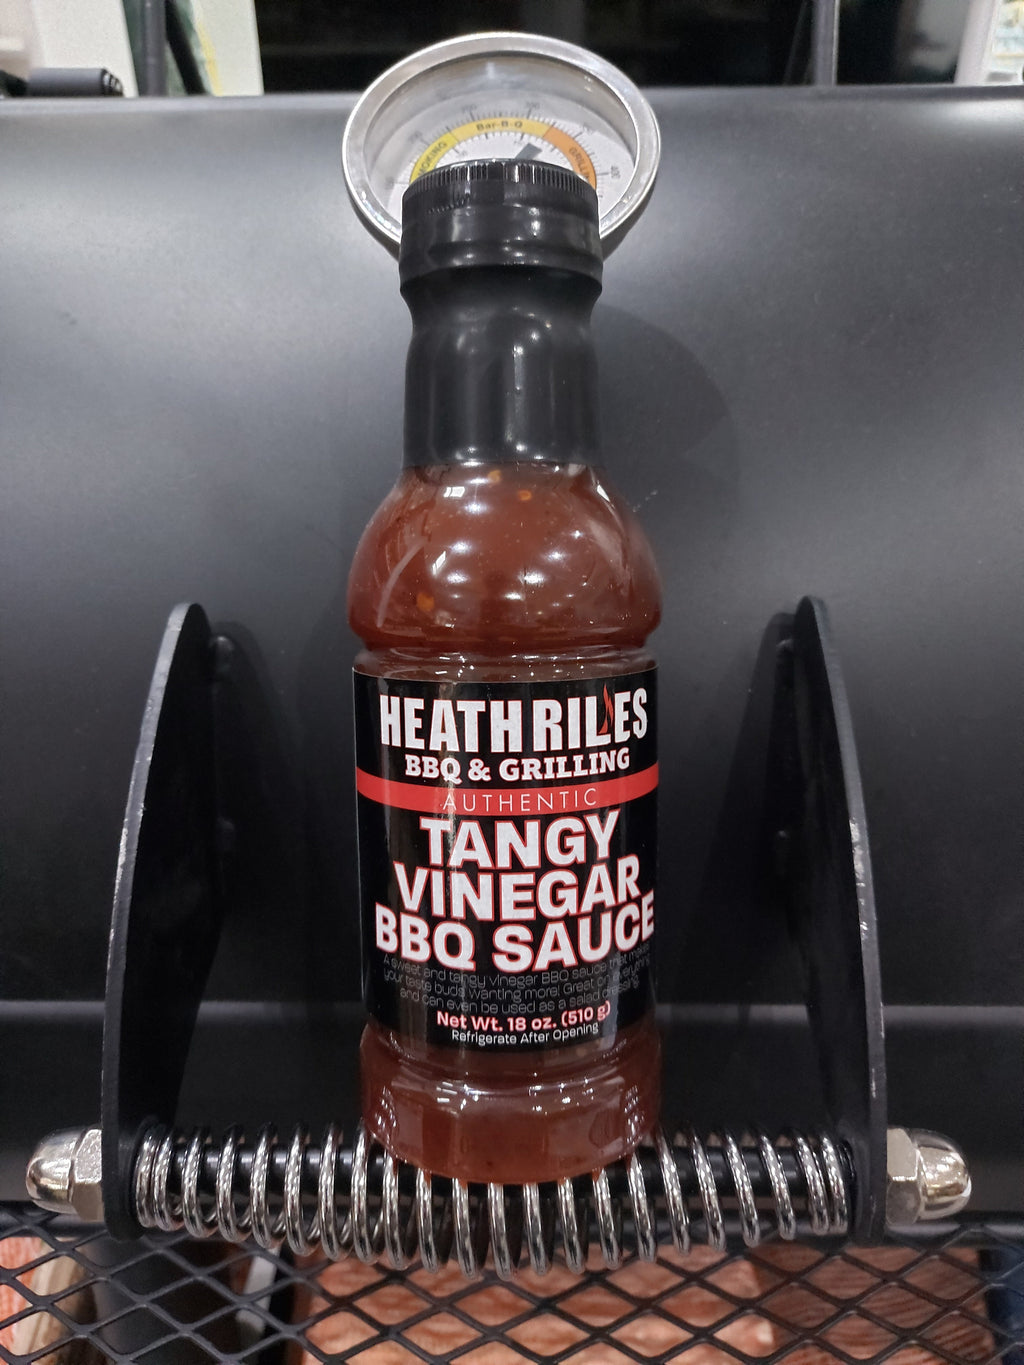 Tangy Vinegar BBQ Sauce 510g by Heath Riles